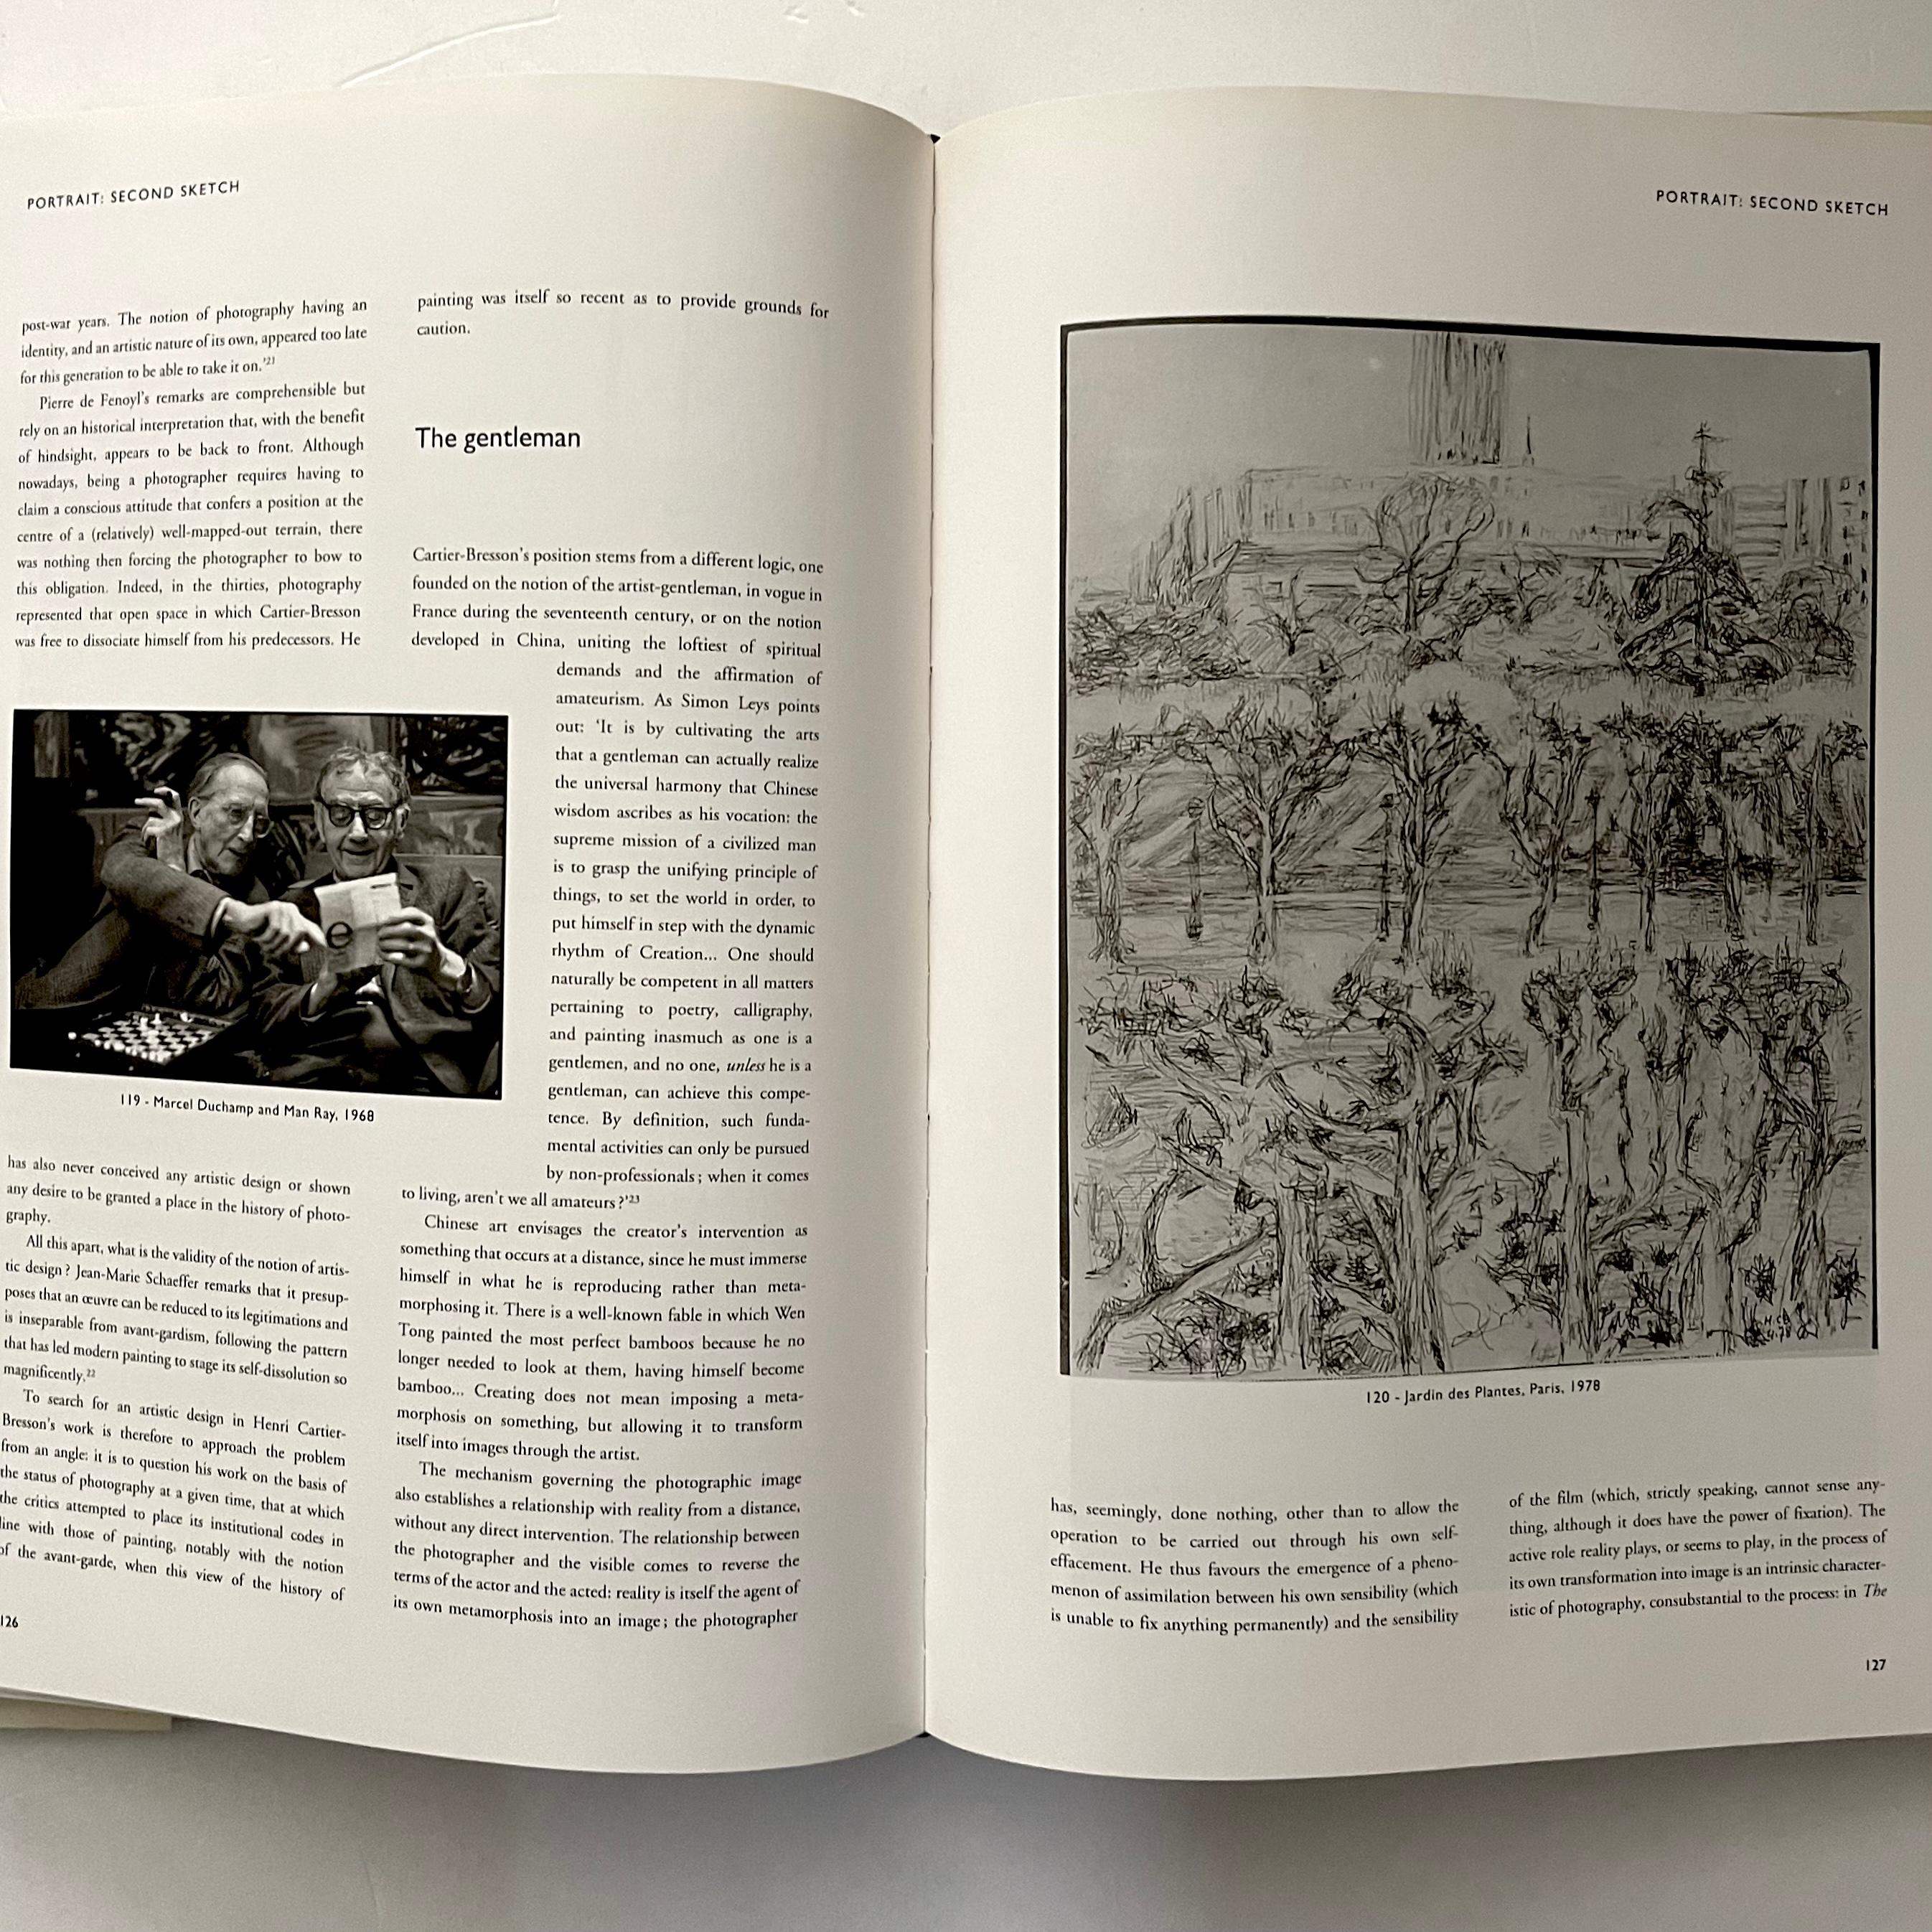 European Henri Cartier Bresson and the Artless Art by Jean-Pierre Montier